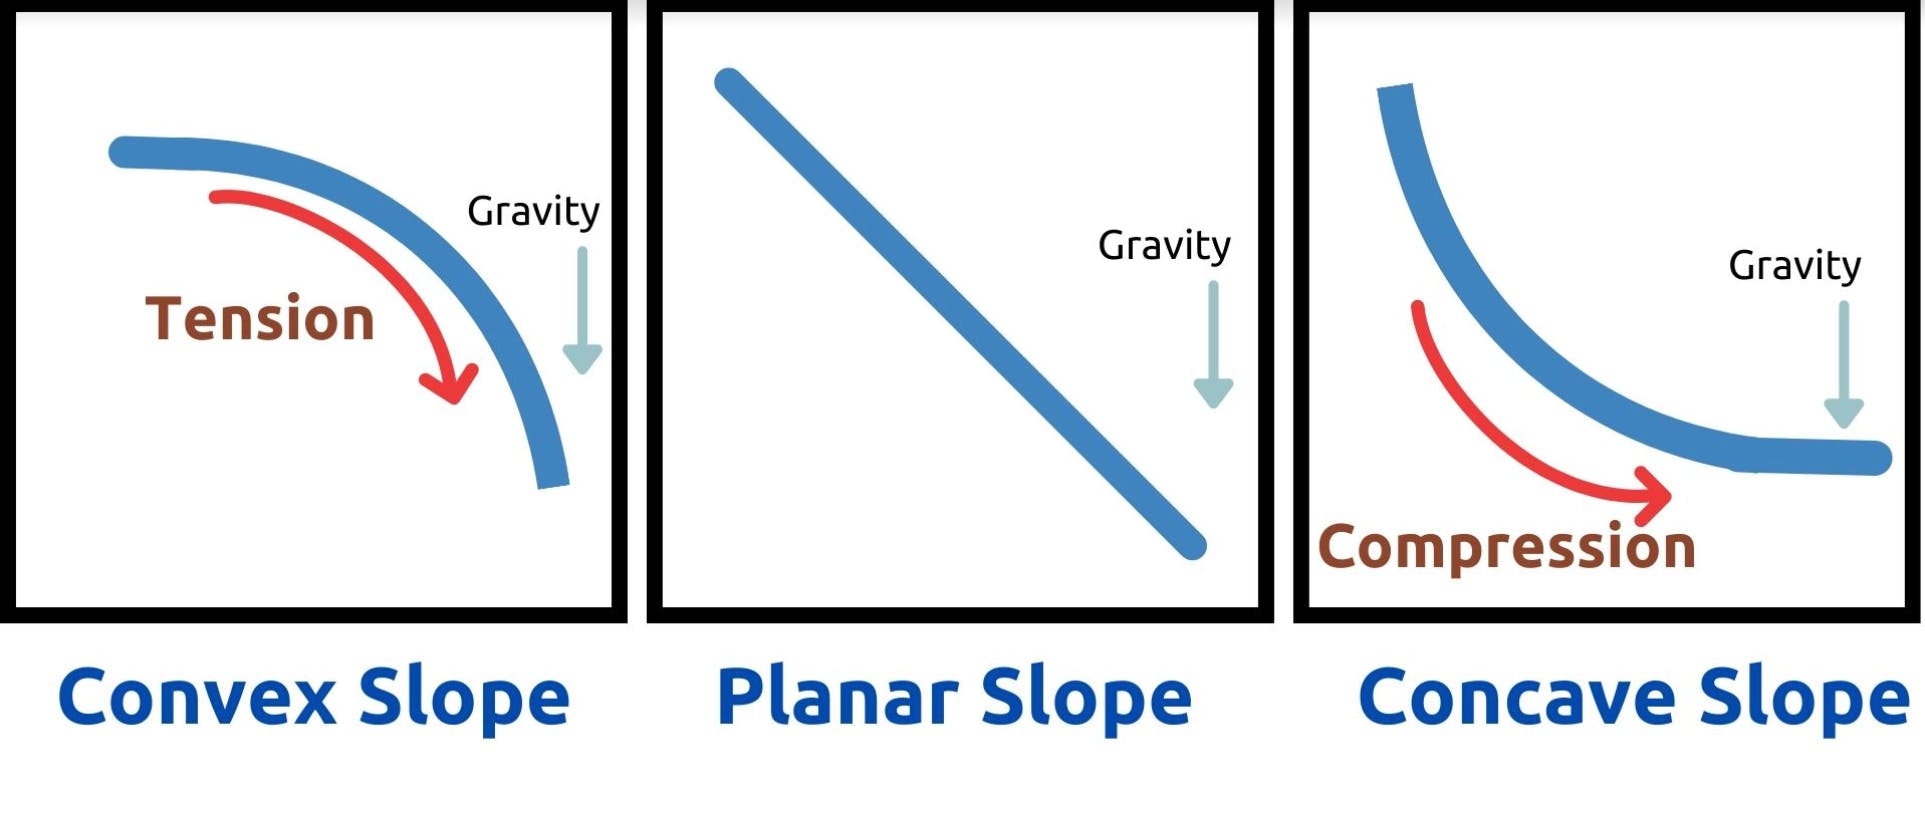 Three separate slope diagrams - convex, planar, and concave.